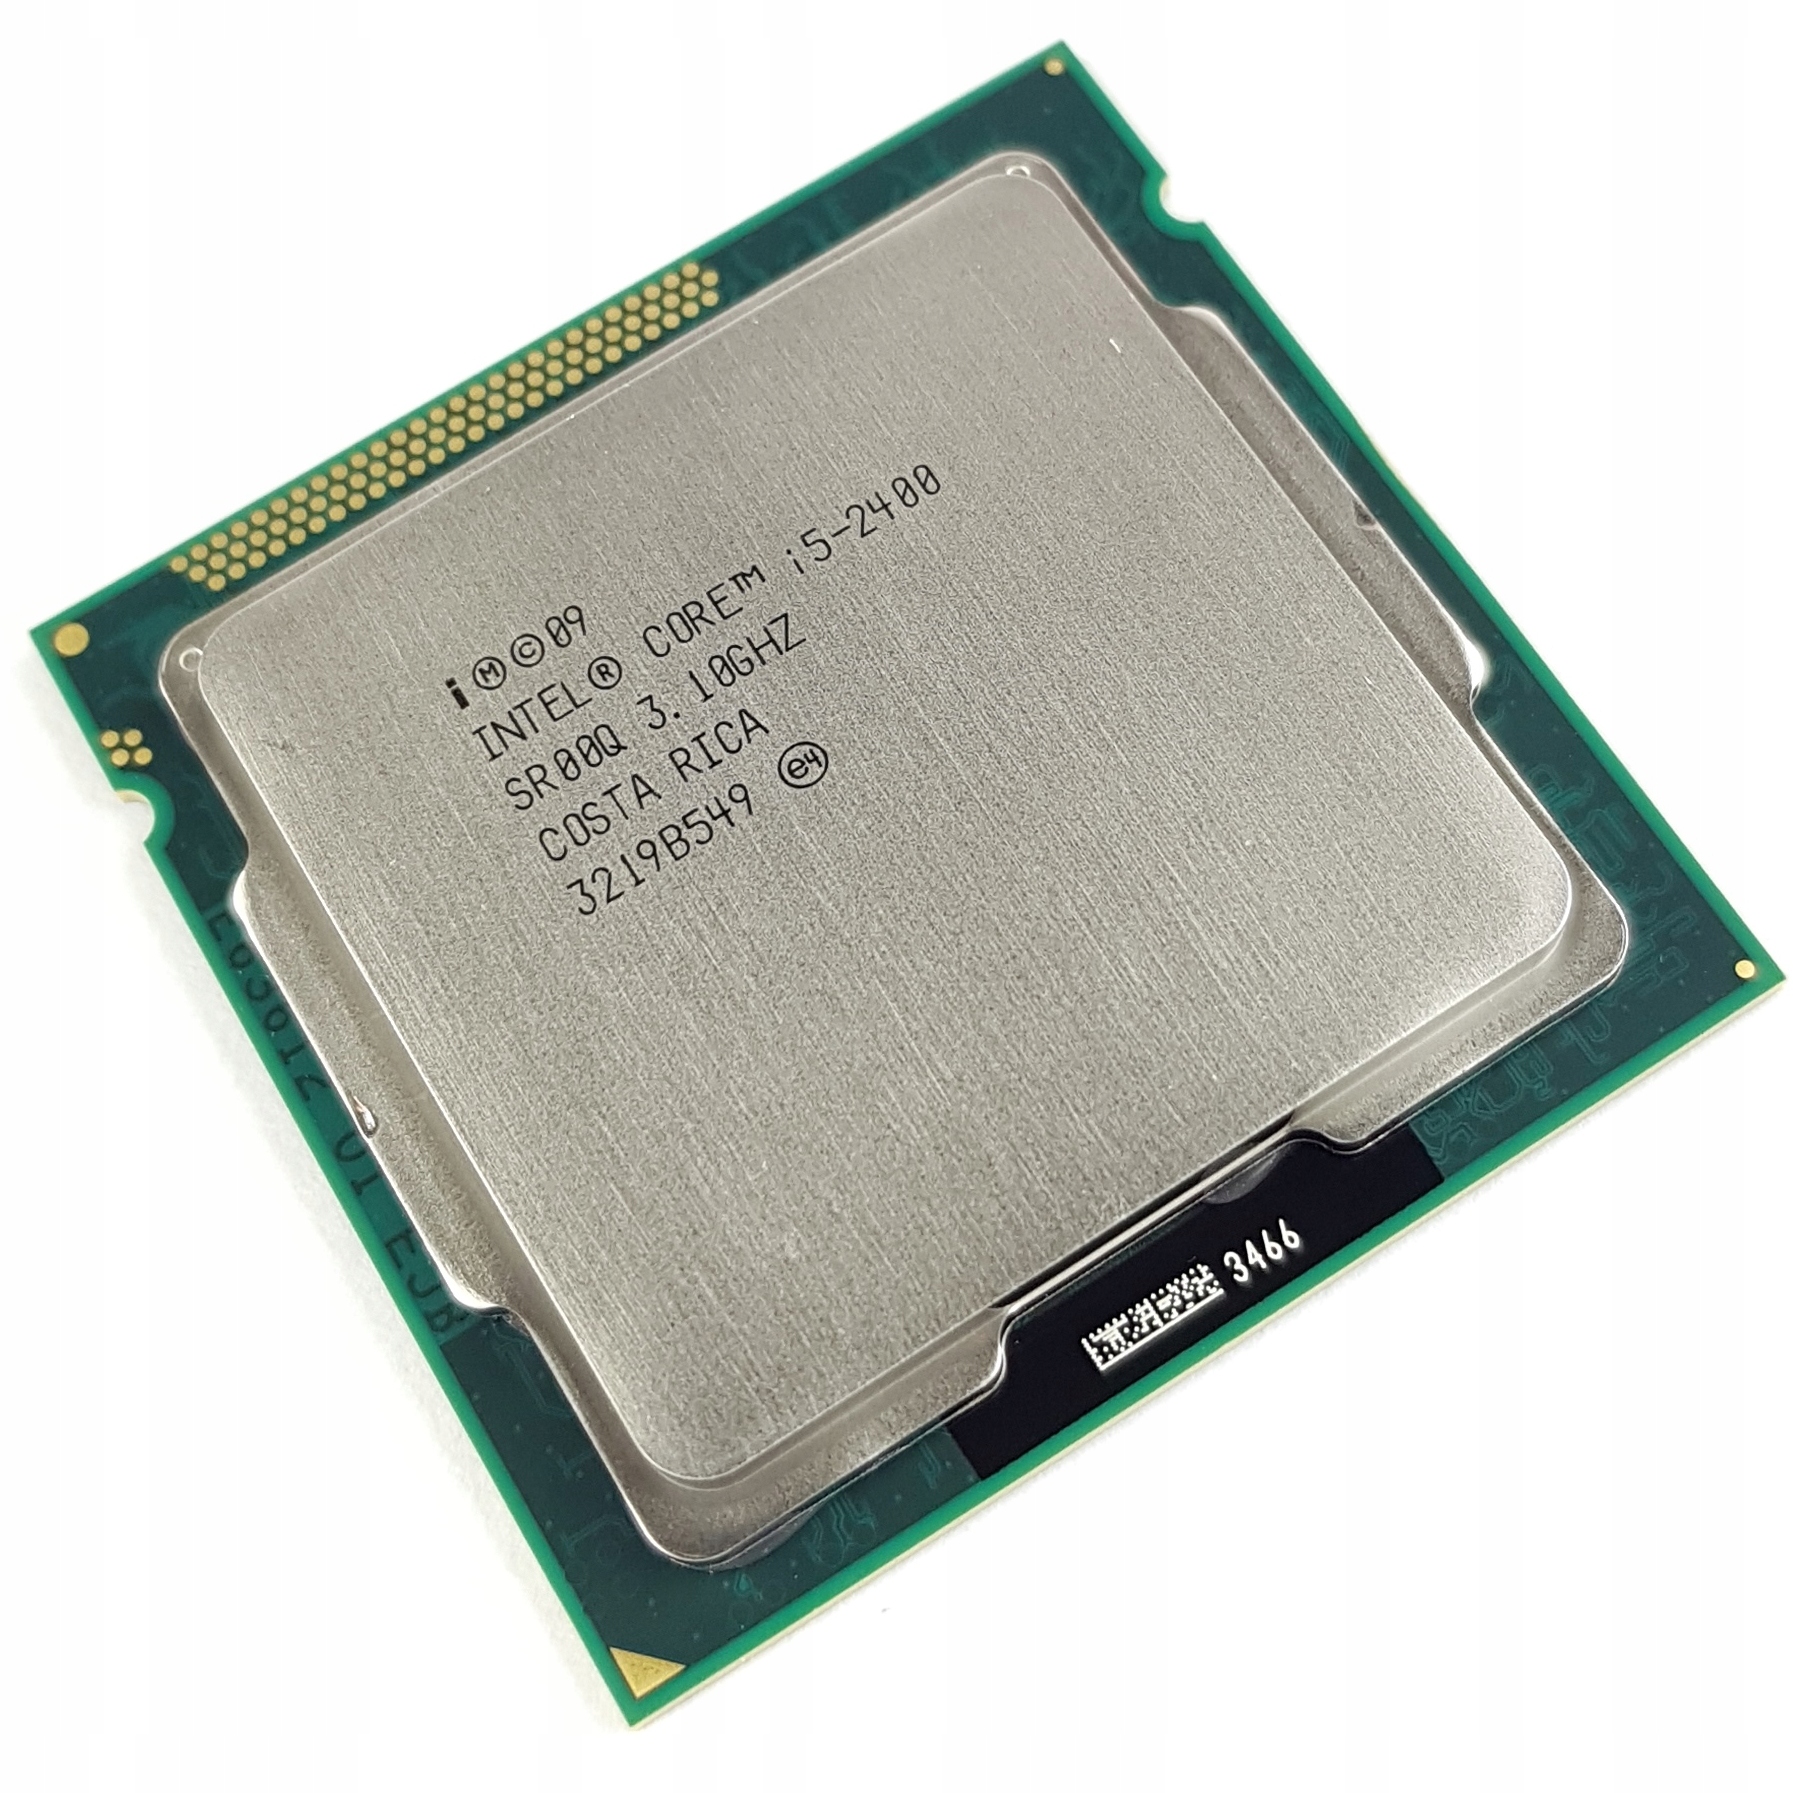 Core i3 3.3 ghz. Intel Core i5-2400 Sandy Bridge lga1155, 4 x 3100 МГЦ. I5 2400 CPU @ 3.10GHZ. Intel Core i5-2400 Sandy Bridge (3100mhz, lga1155, l3 6144kb). Процессор Intel Core i5 1155.